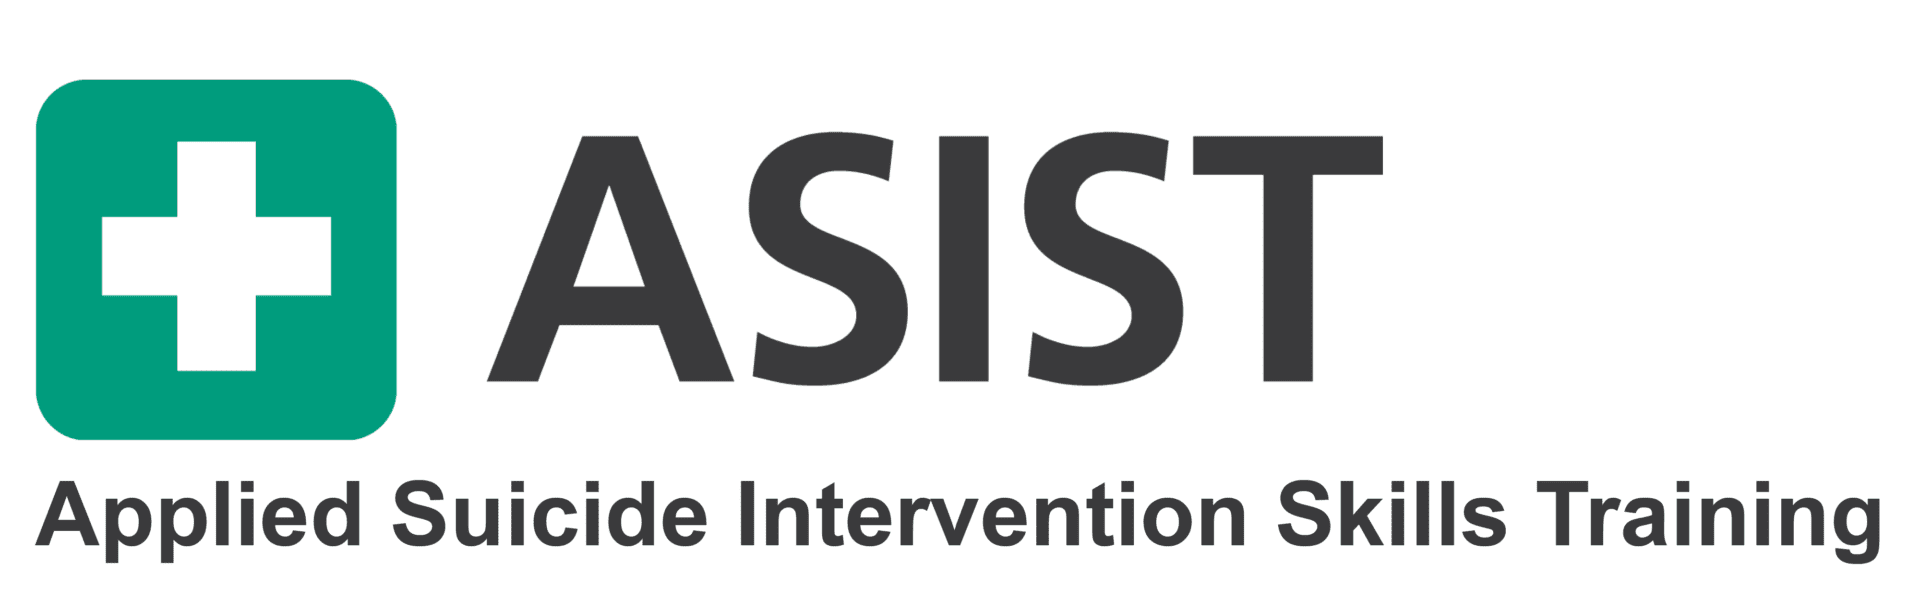 ASIST-Green-Logo-Banner-960x300-2